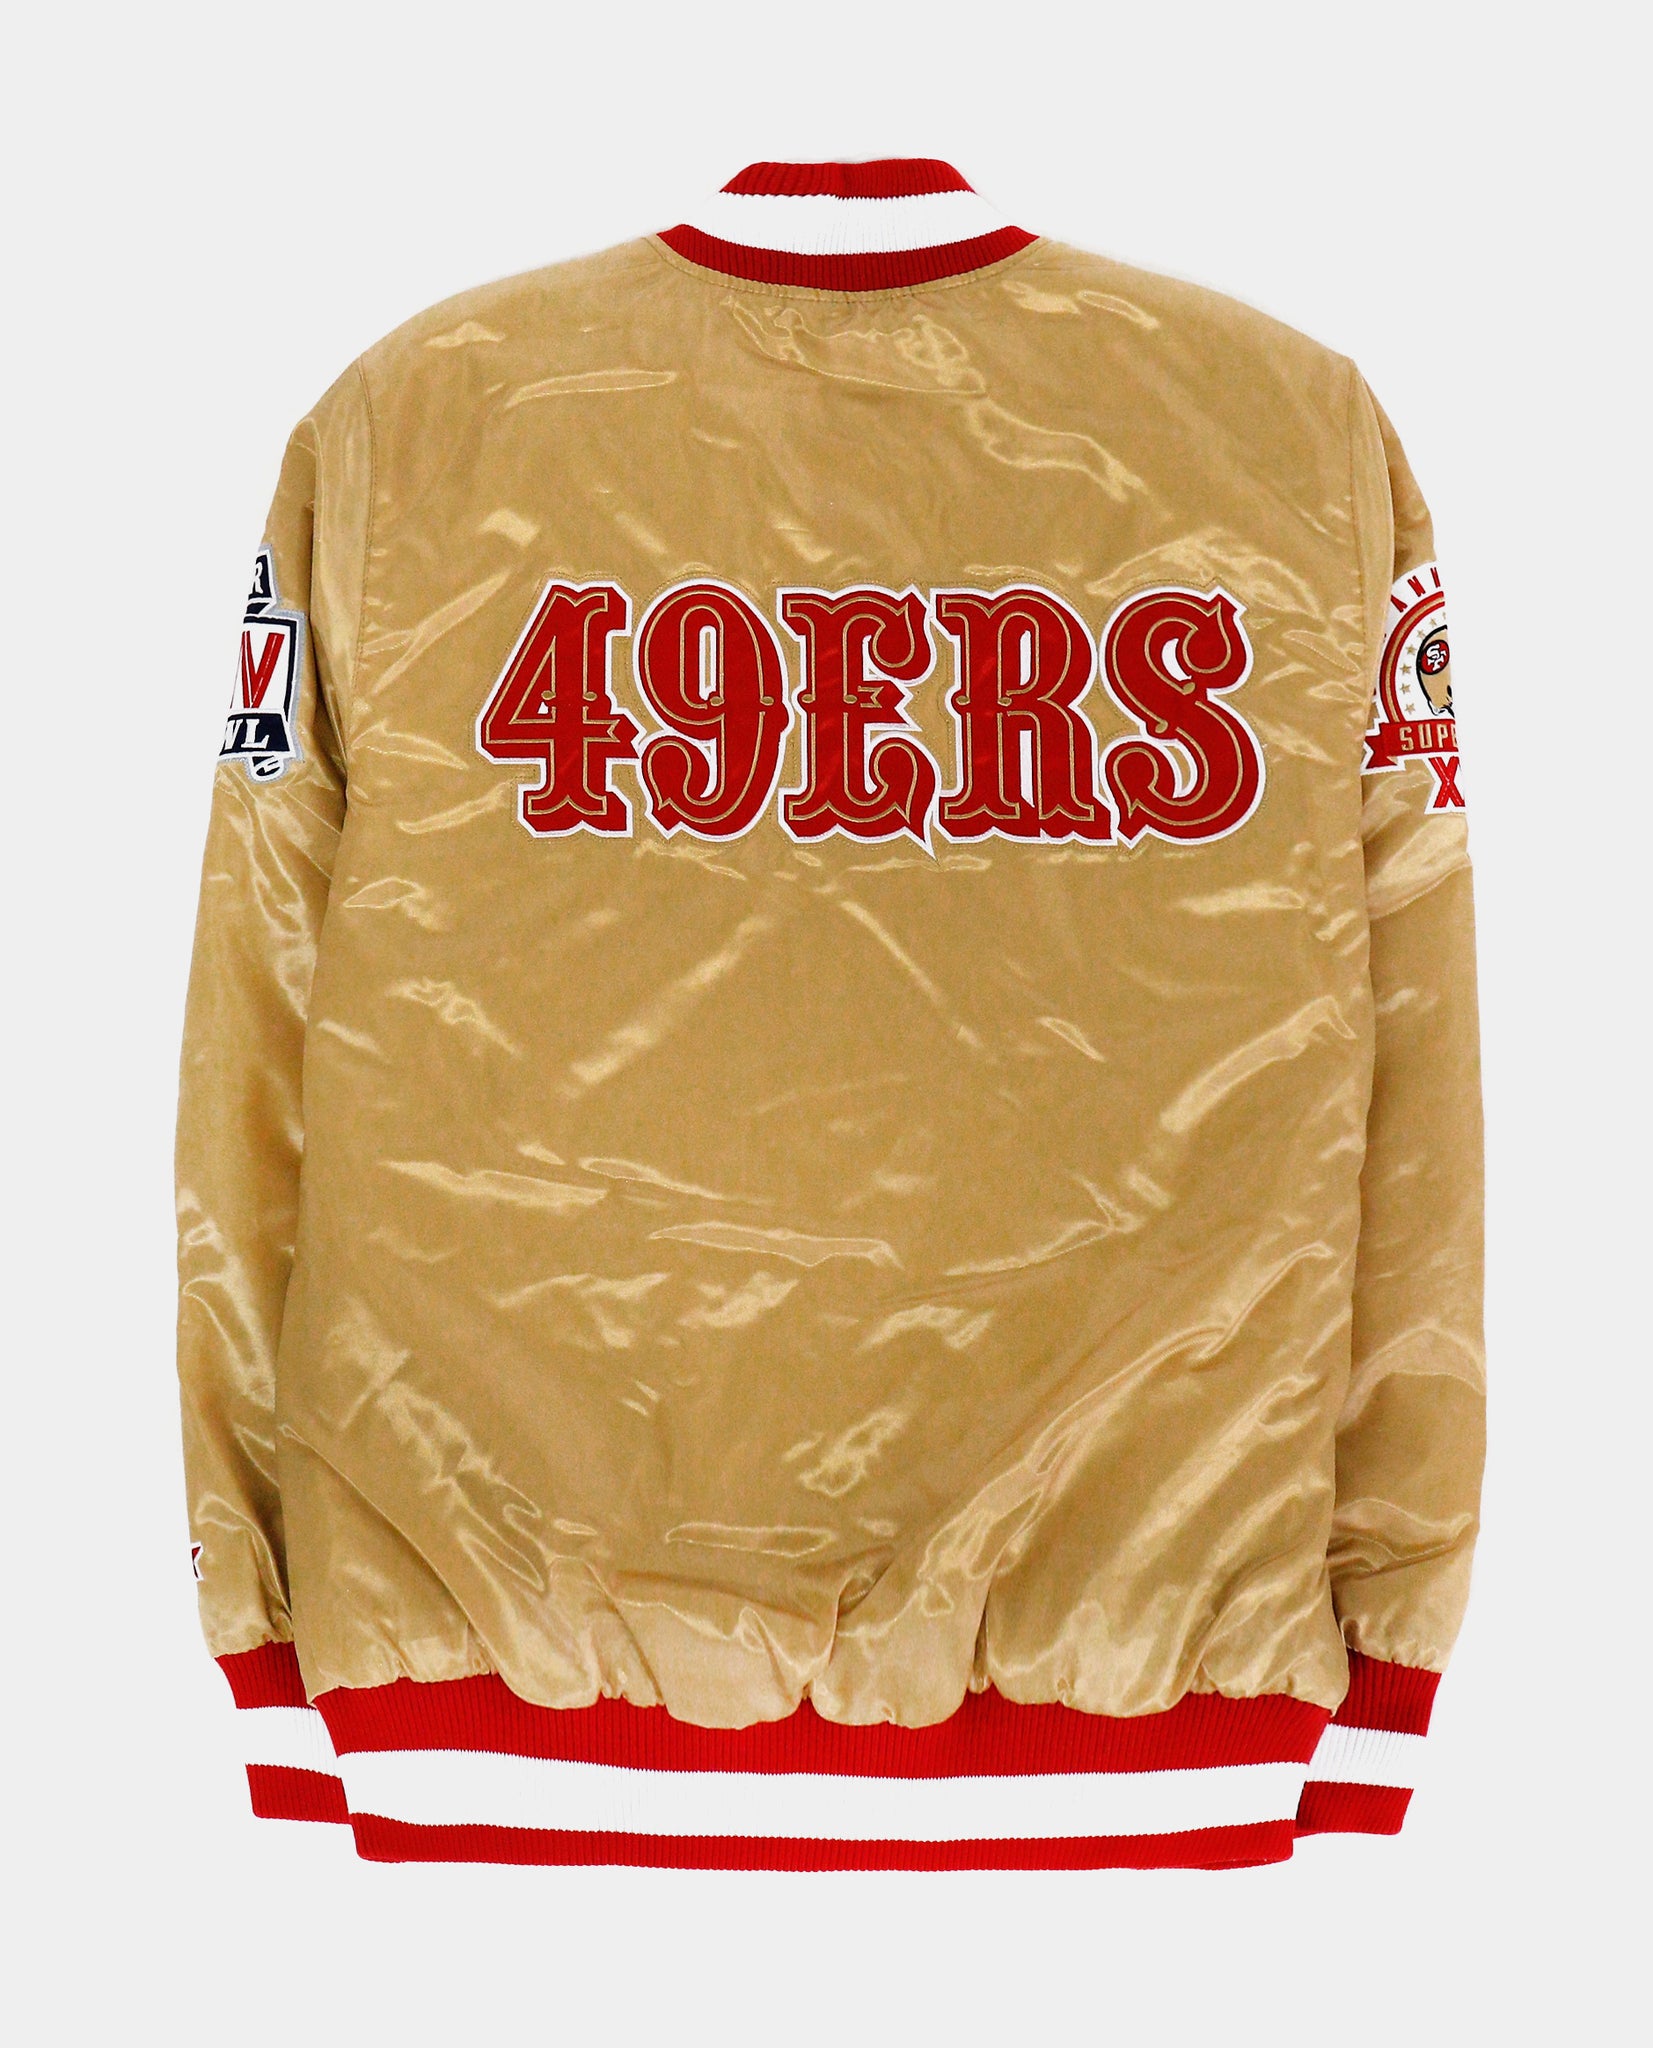 San Francisco 49ers Poly Twill Varsity Jacket - Red